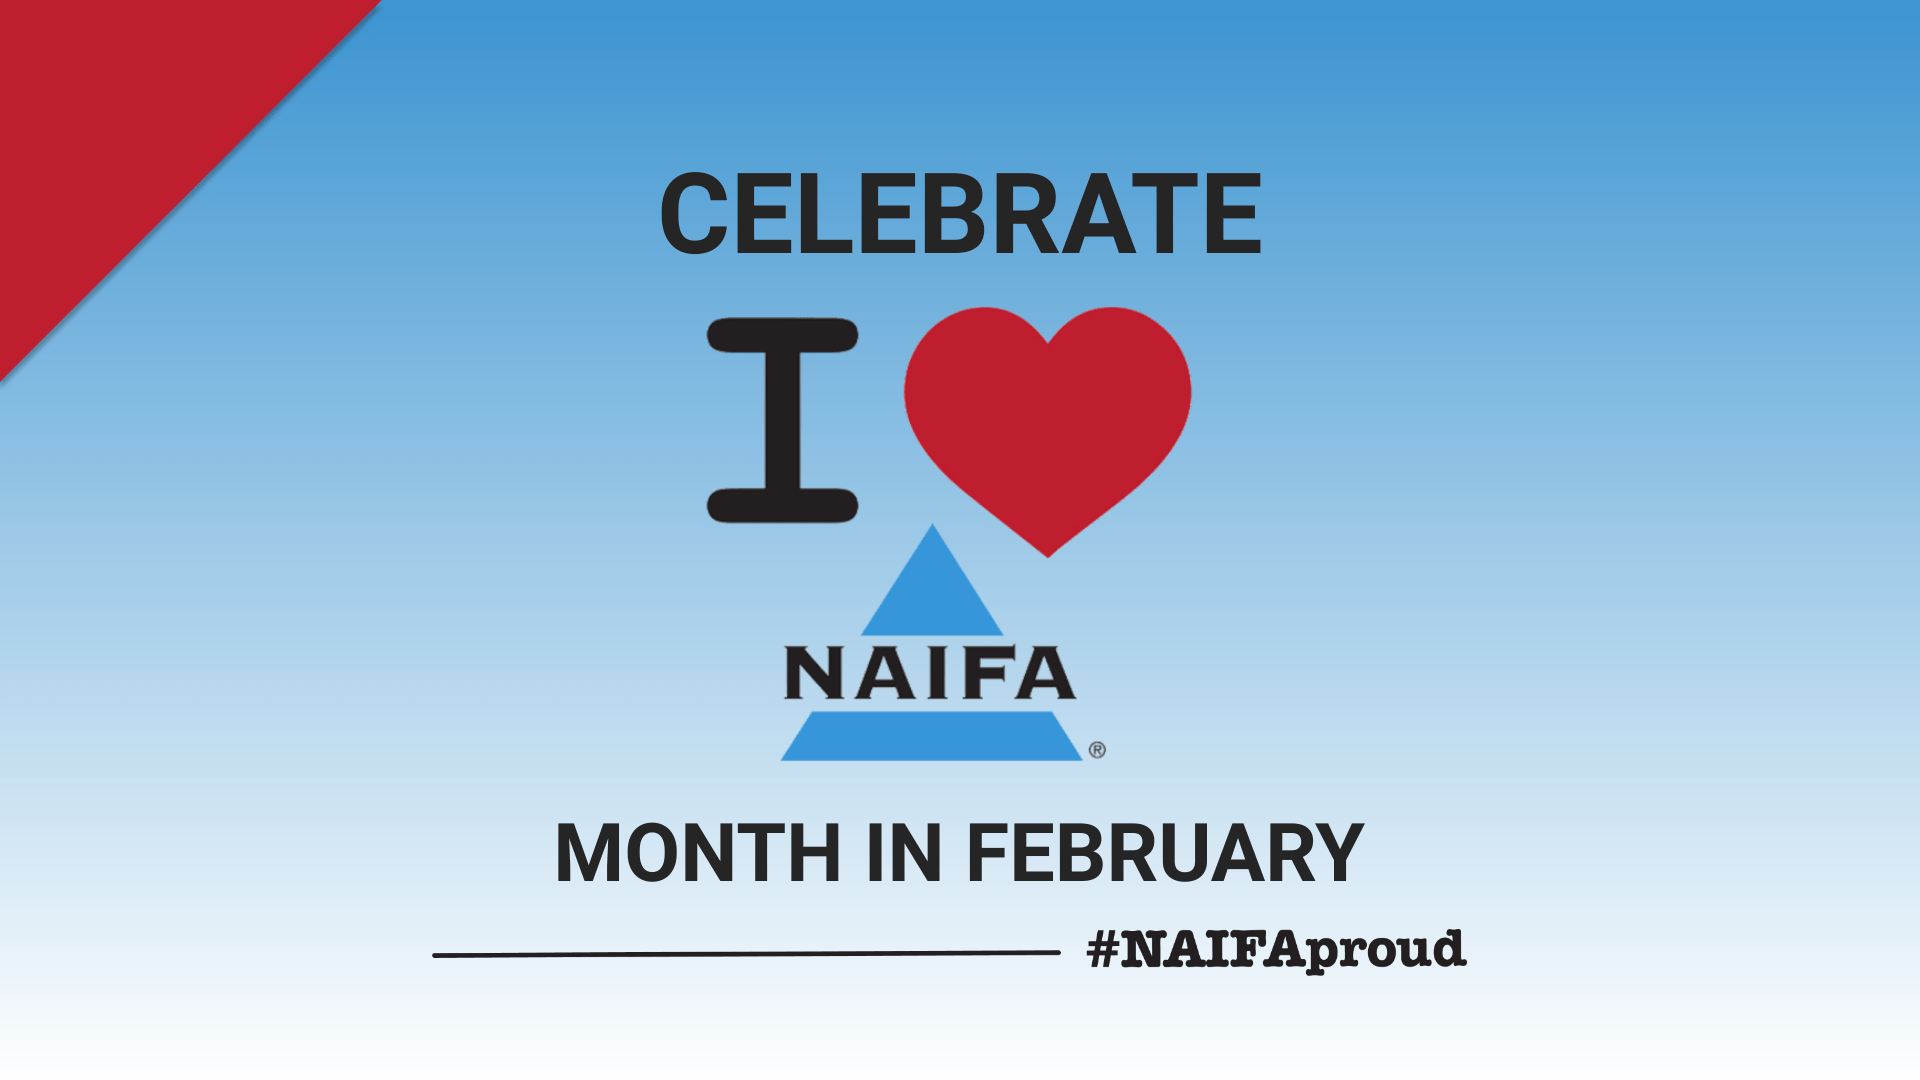 Celebrate I love NAIFA Month